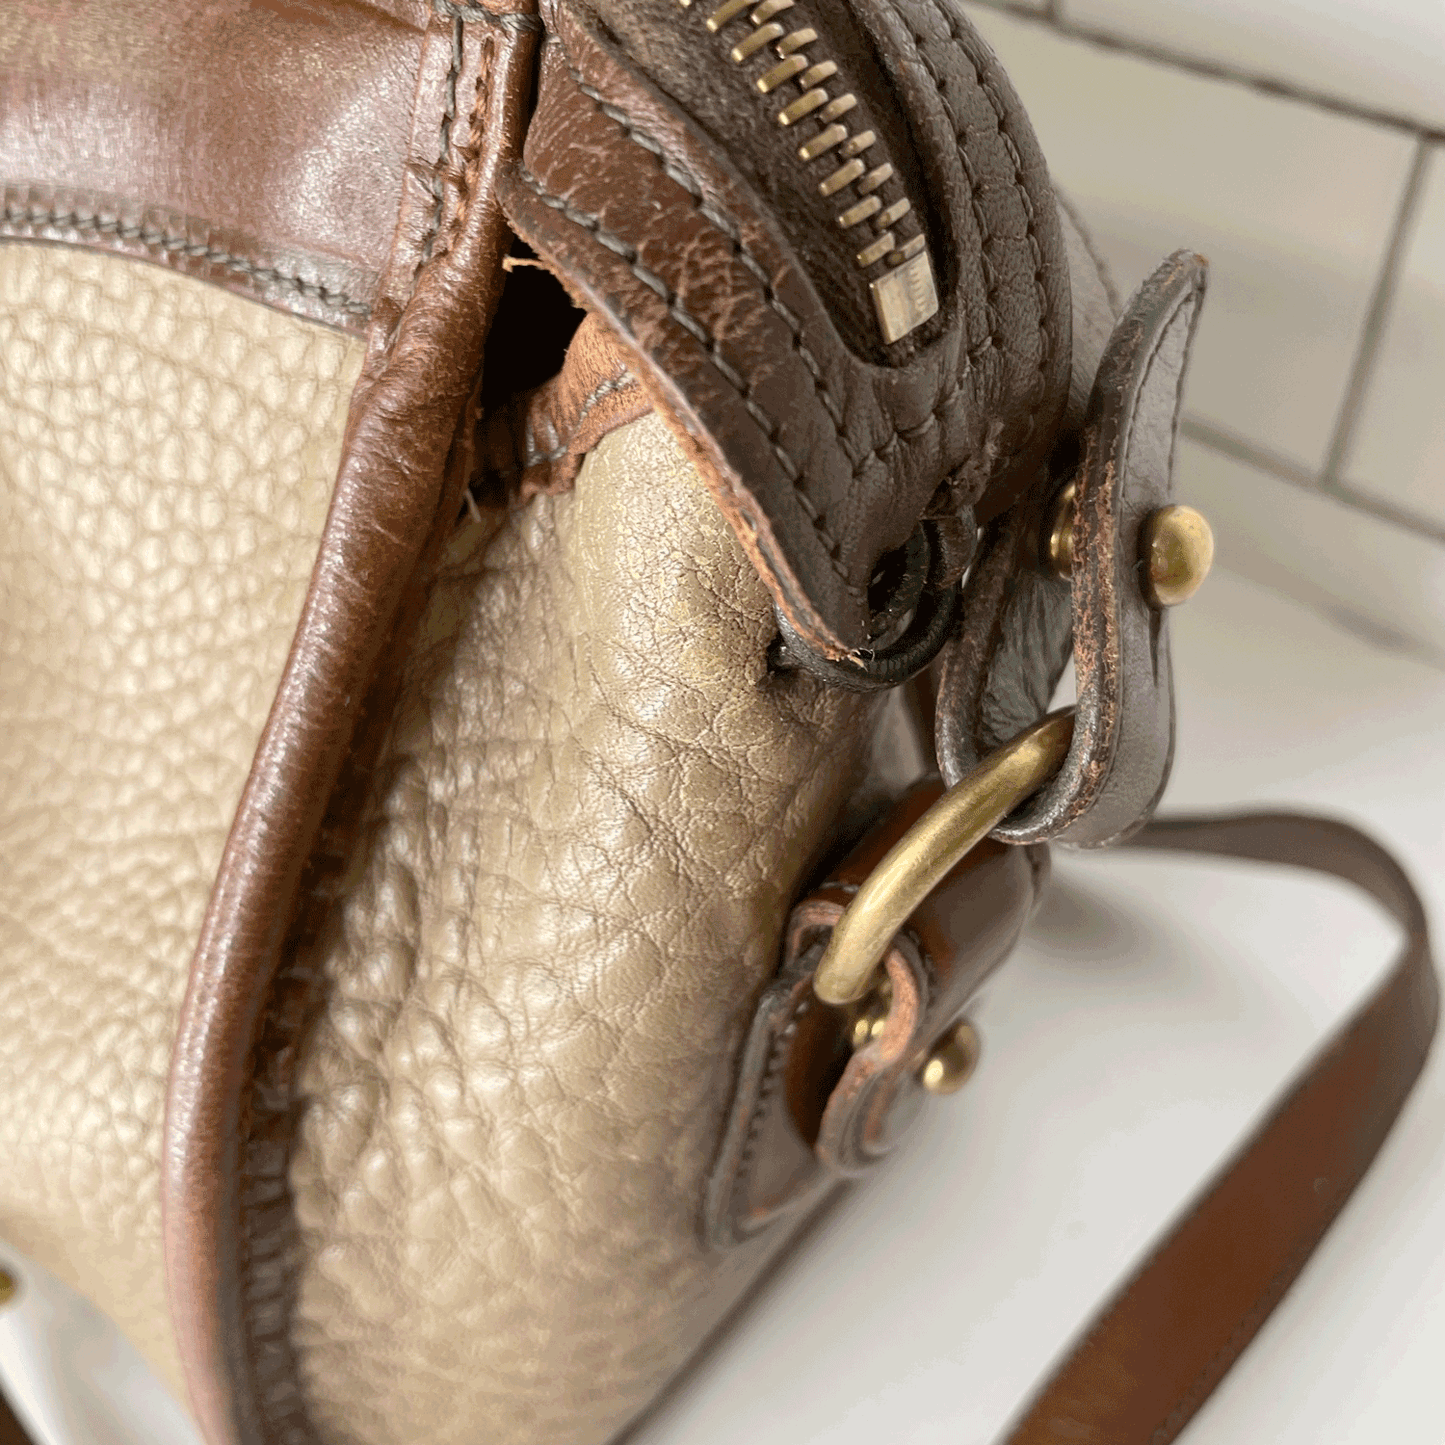 vintage dooney and bourke mini satchel carrier bag